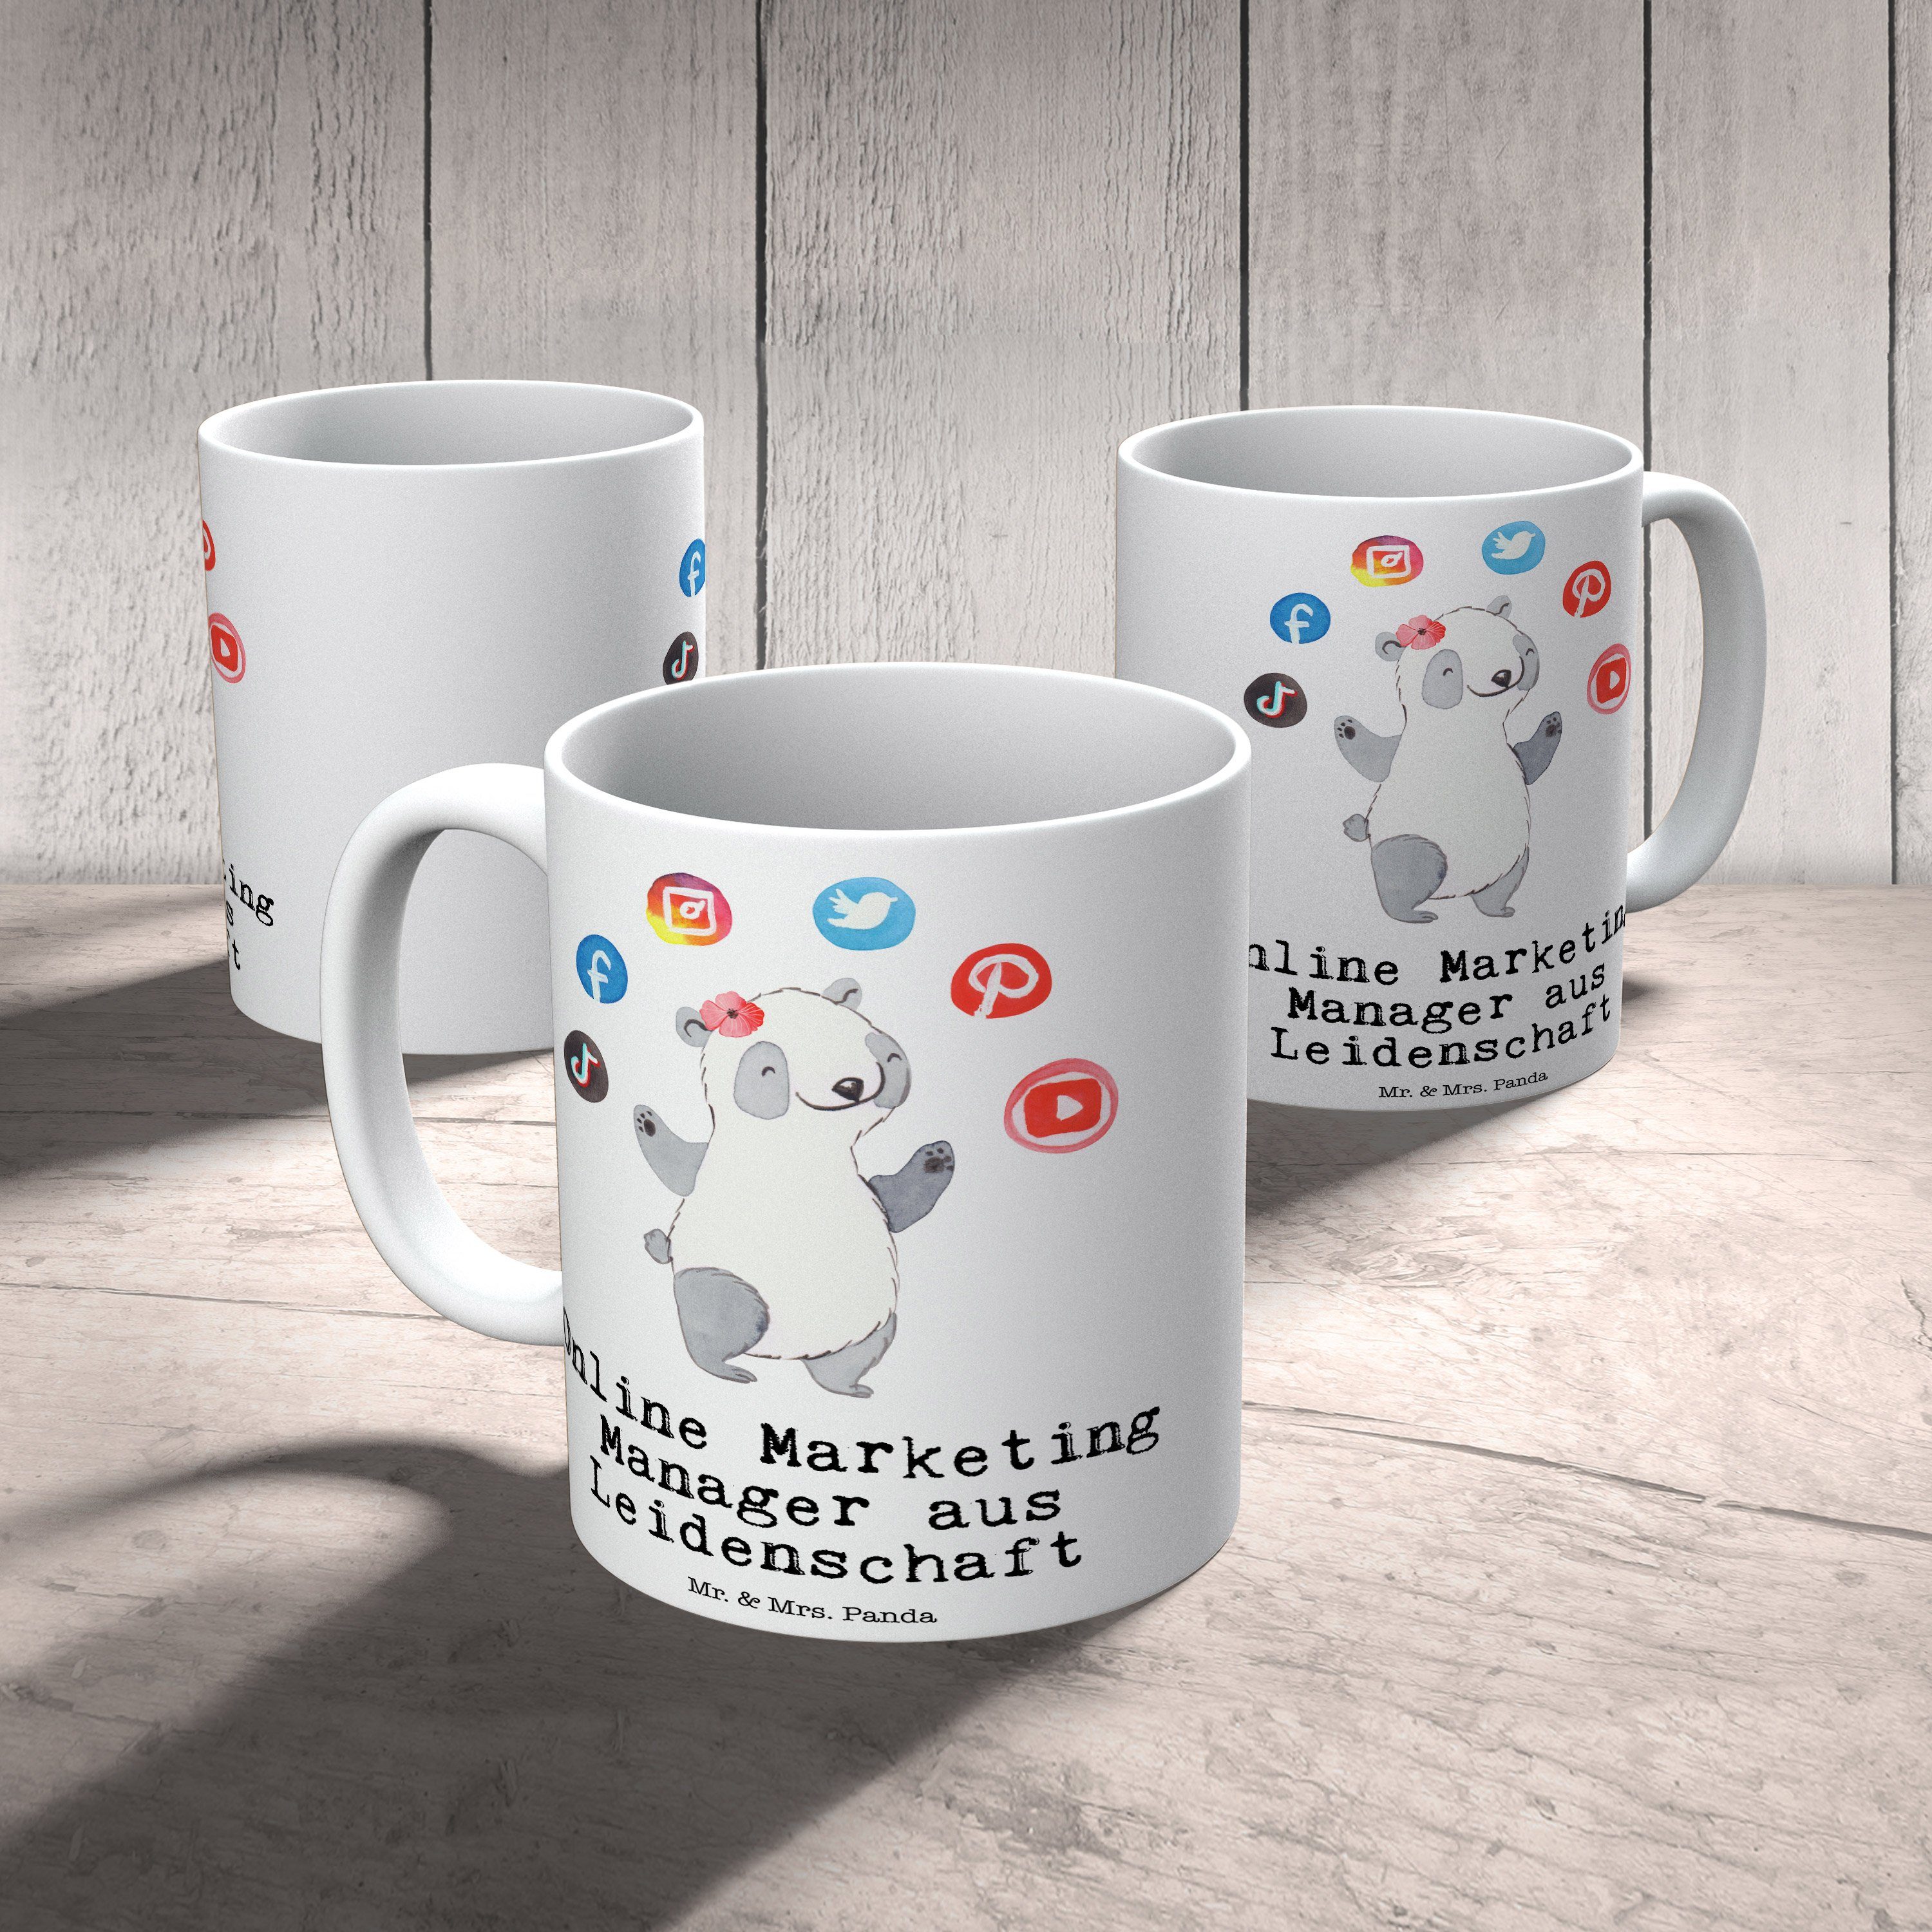 Manager Online Marketing Leidenschaft aus Mrs. - Geschenk, Panda Mr. Kaffeebe, - & Keramik Tasse Weiß